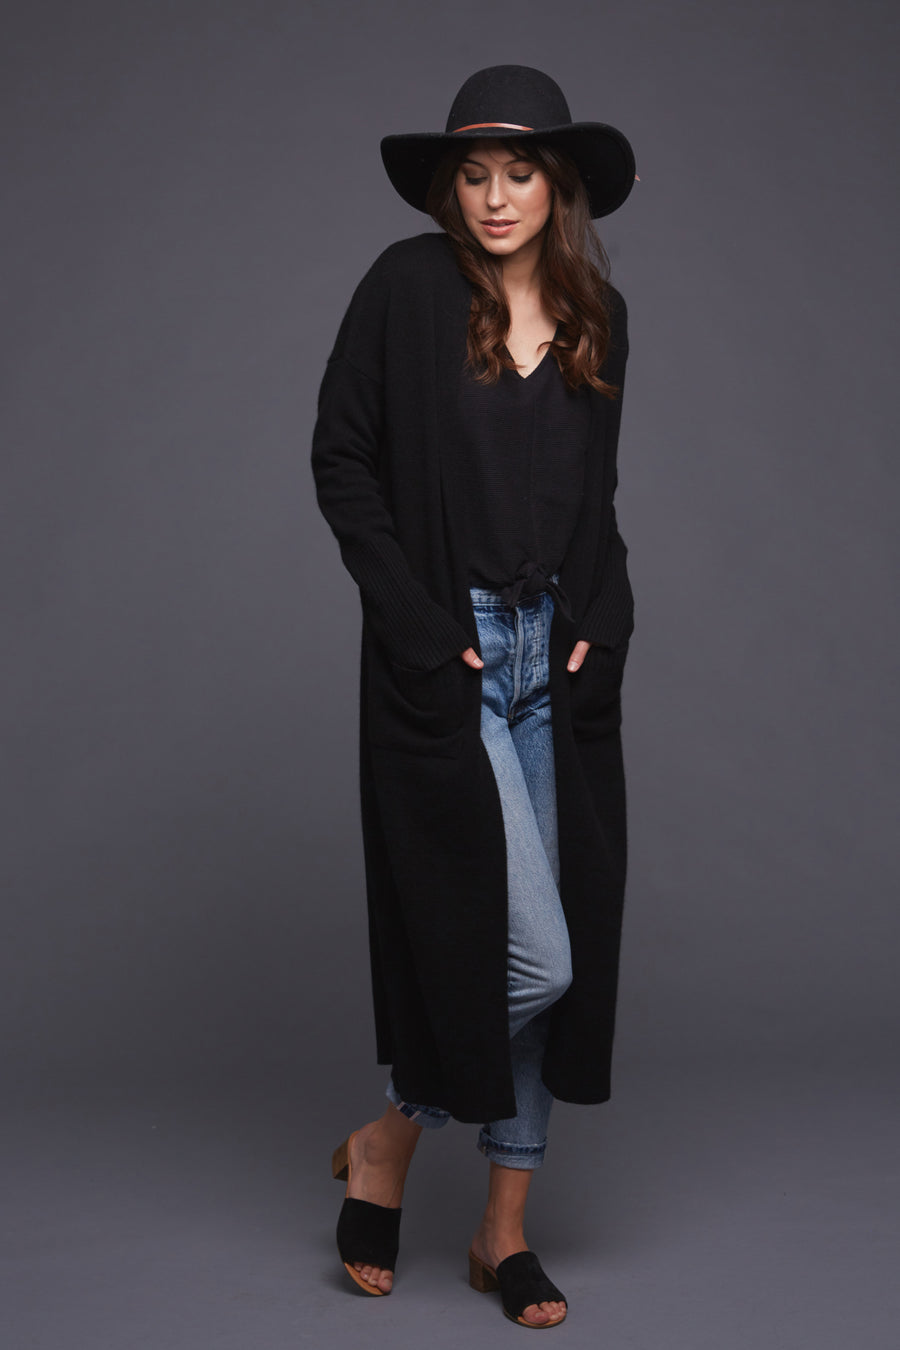 pine cashmere stella women's cashmere wool blend long cardigan coat duster in black